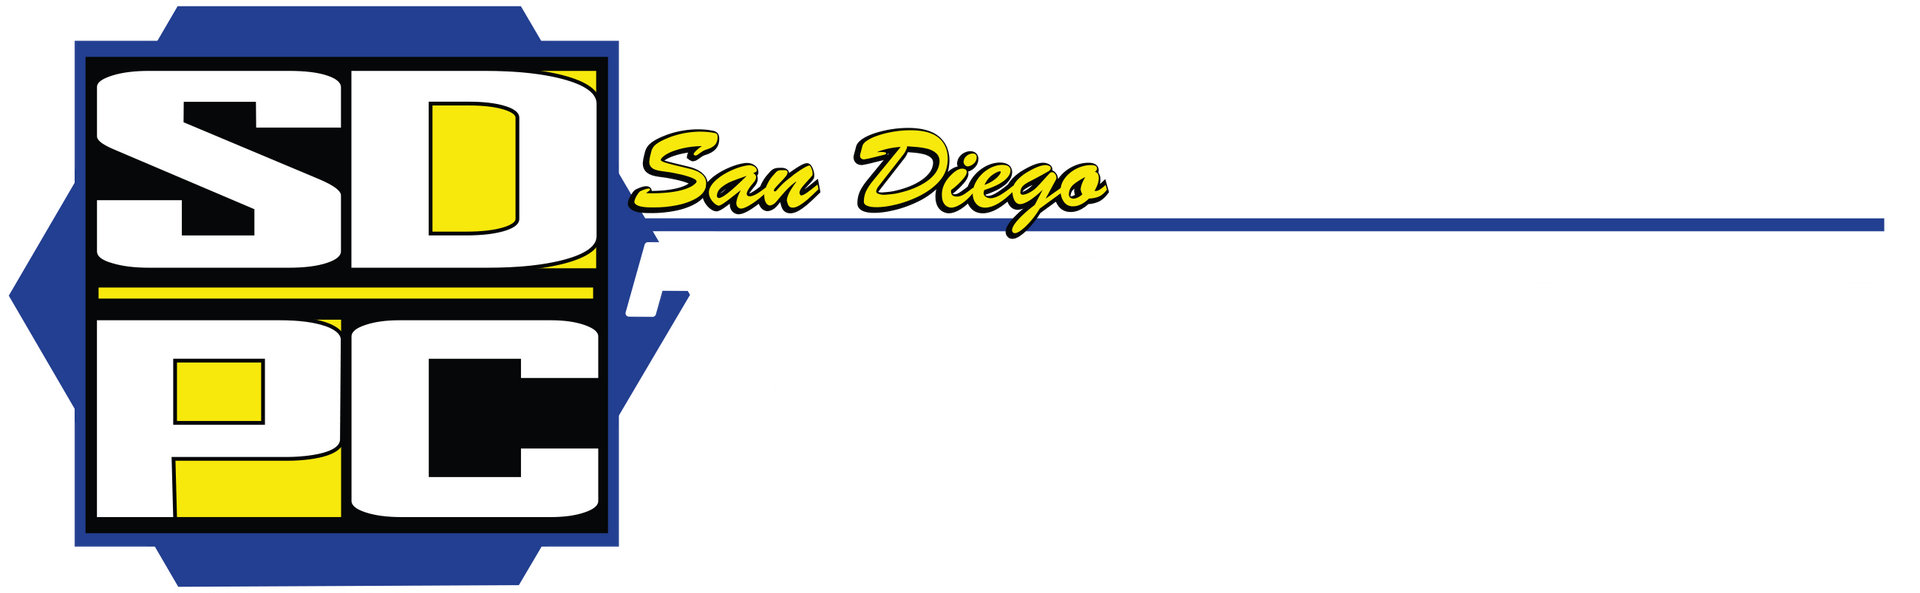 San Diego Powder & Protective Coatings Logo